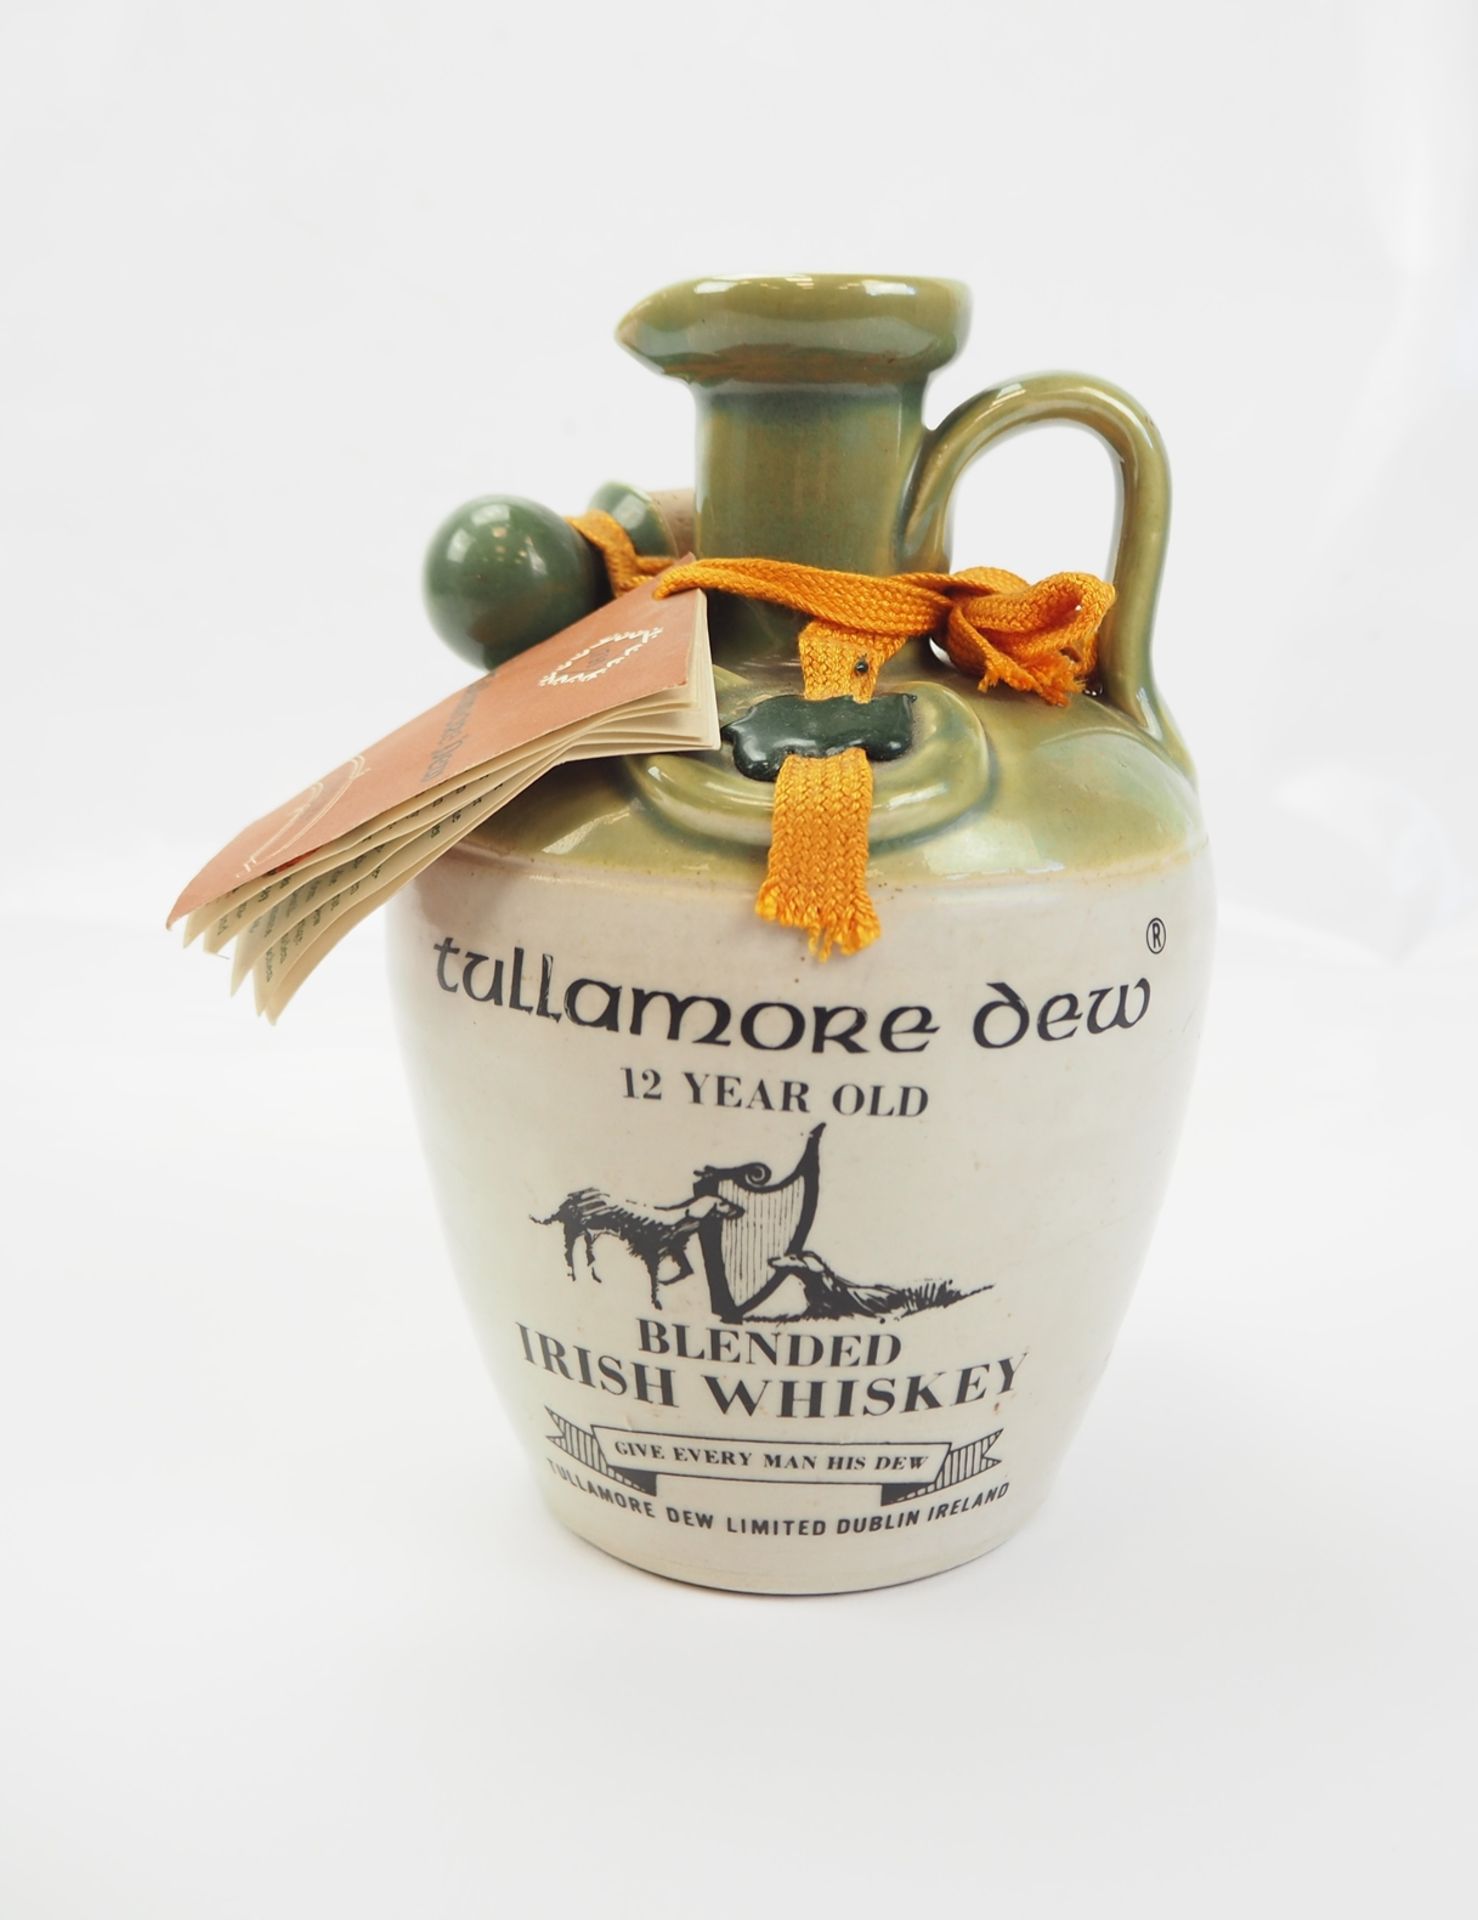 Tullamore Dew 12 Year Old Blended Irish Whiskey.